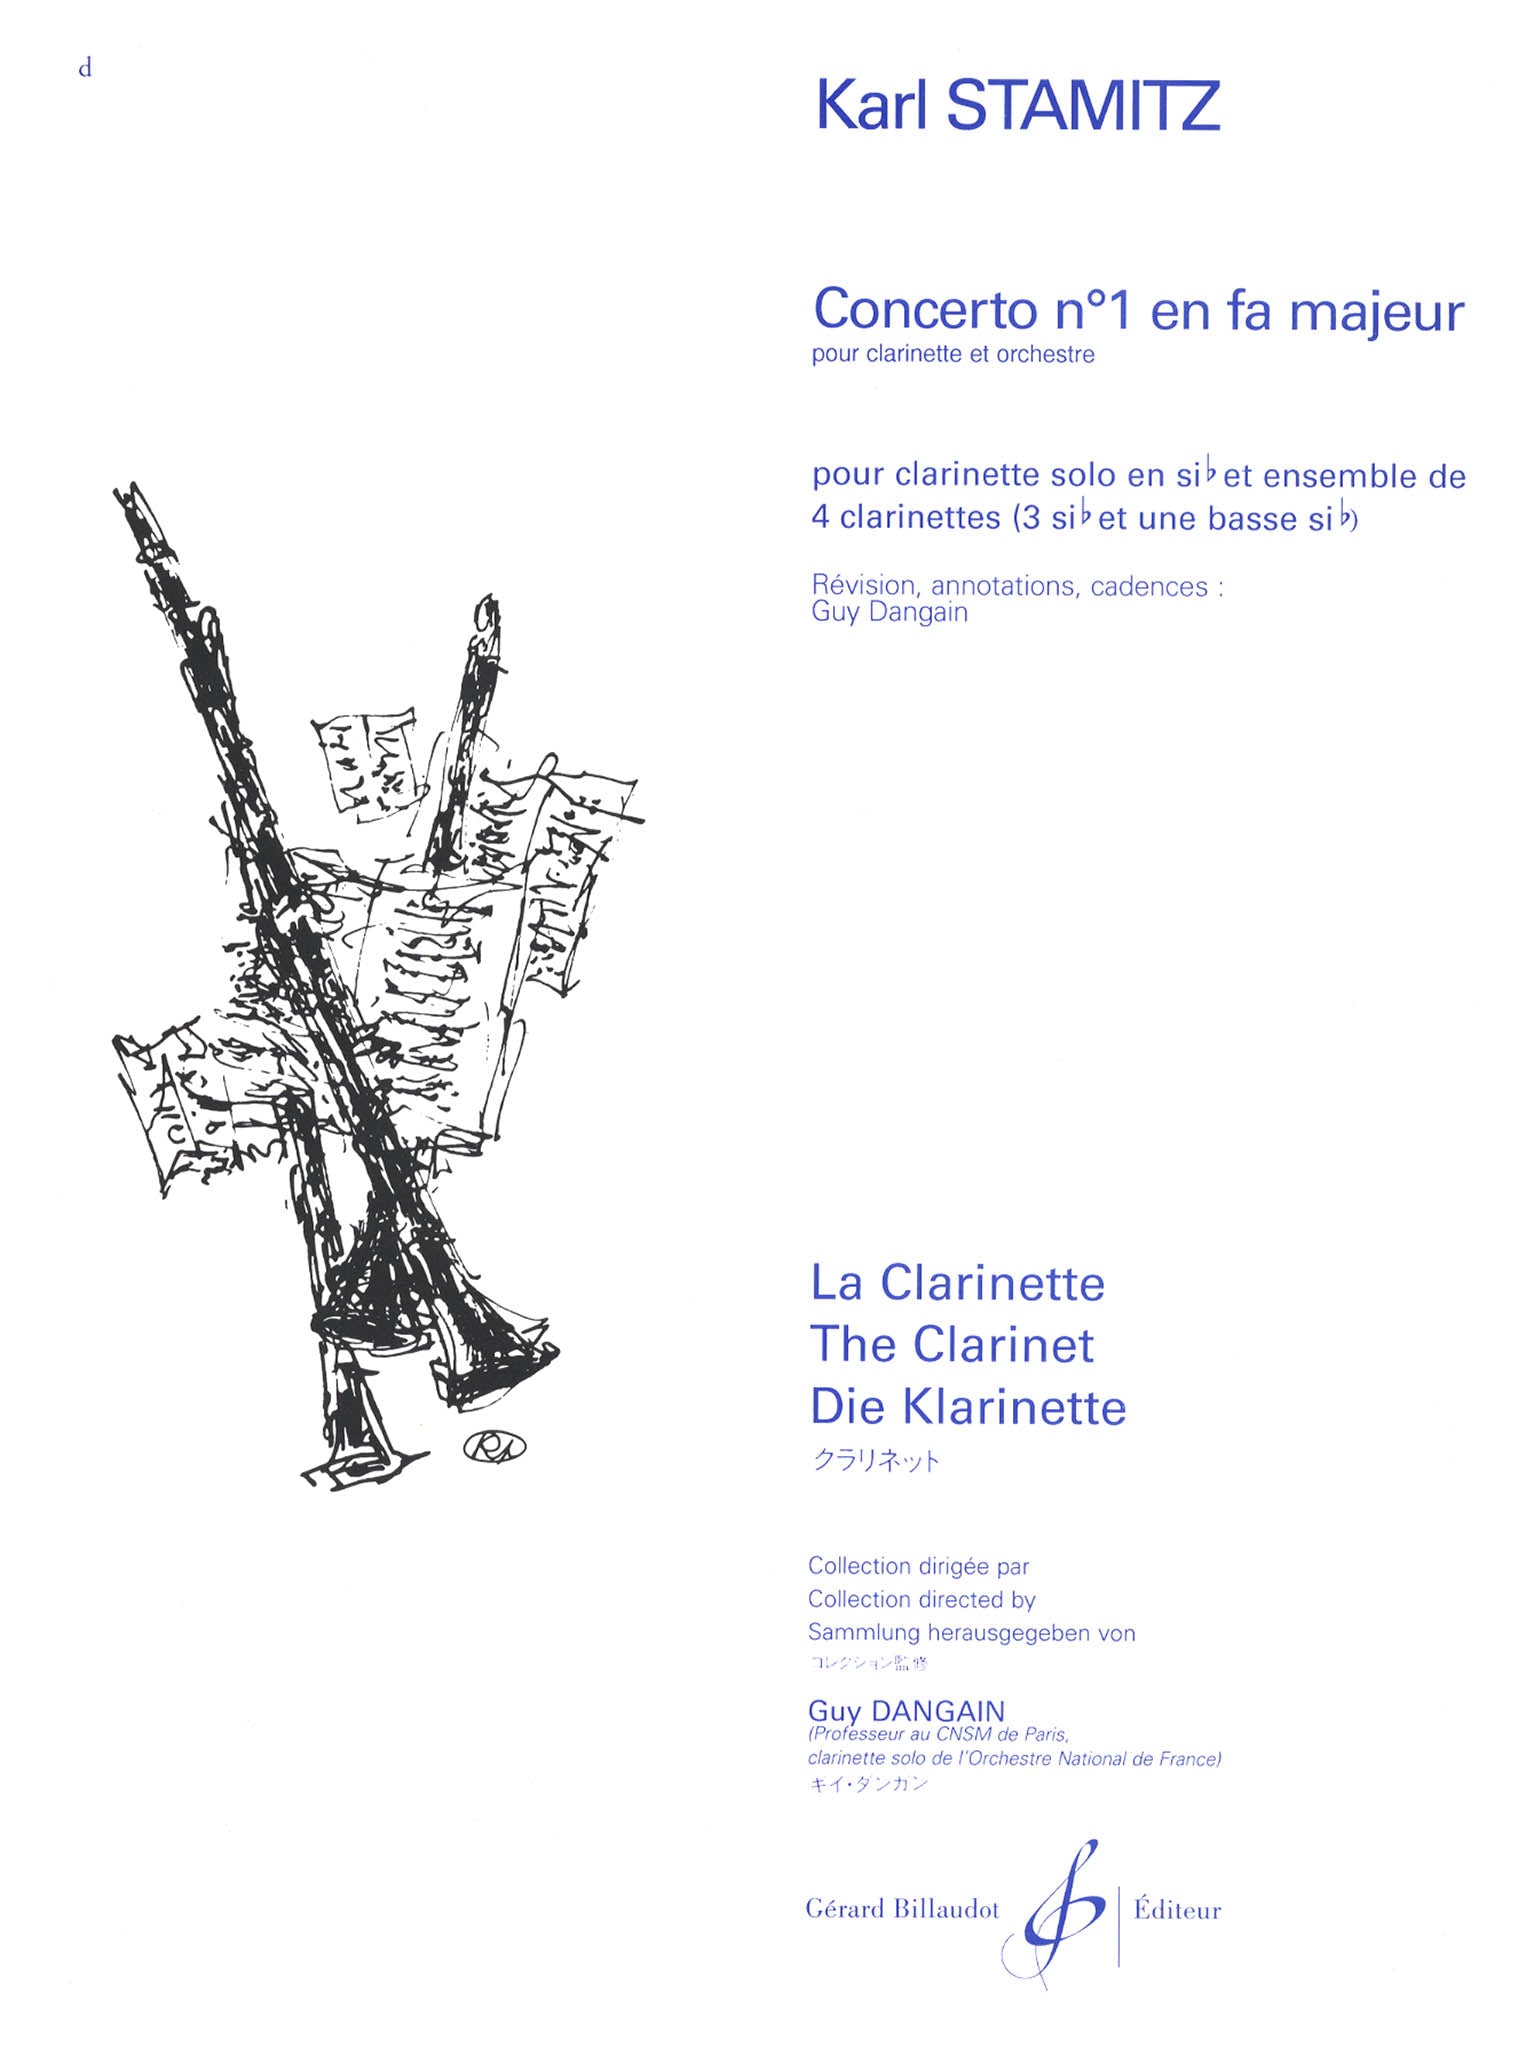 Carl Stamitz Clarinet Concerto No. 1 five clarinets arrangement cover